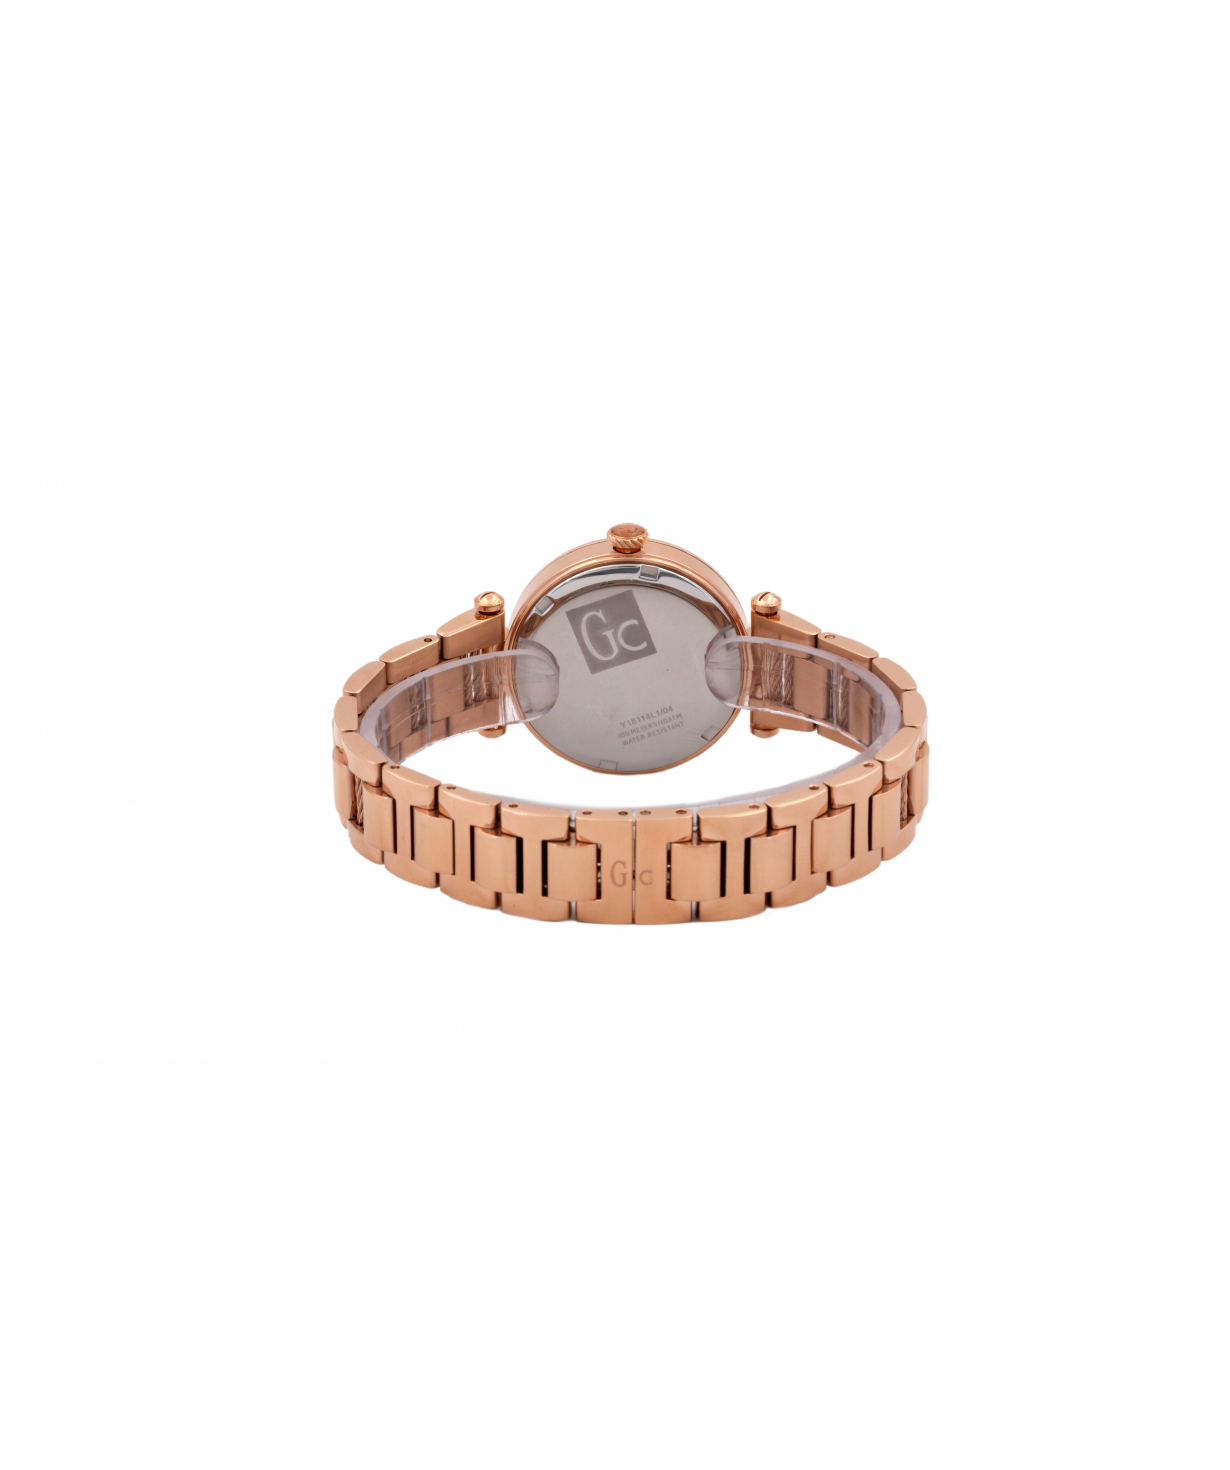 Wrist watch `Gc` Y18114L1